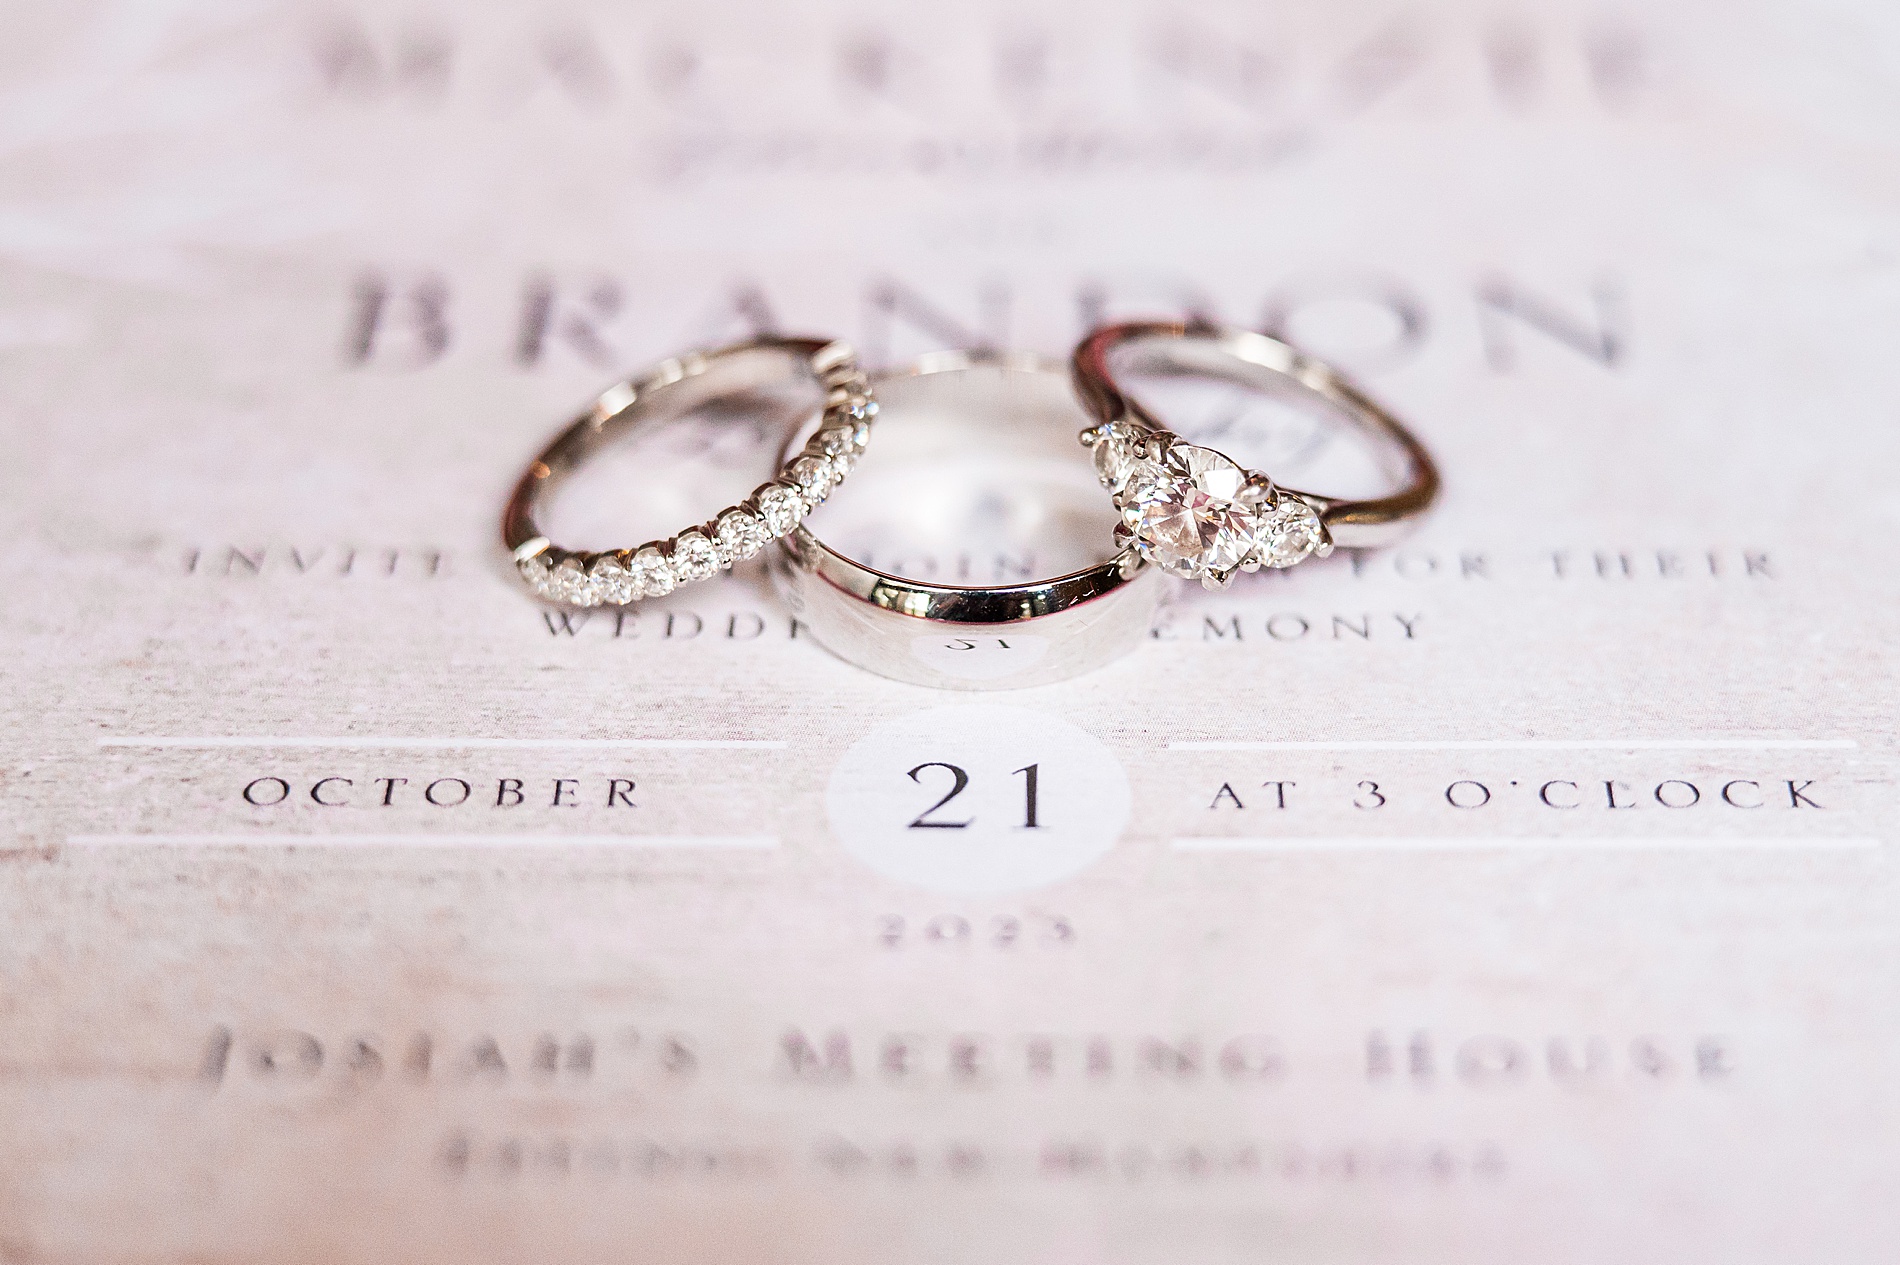 wedding rings on invitations